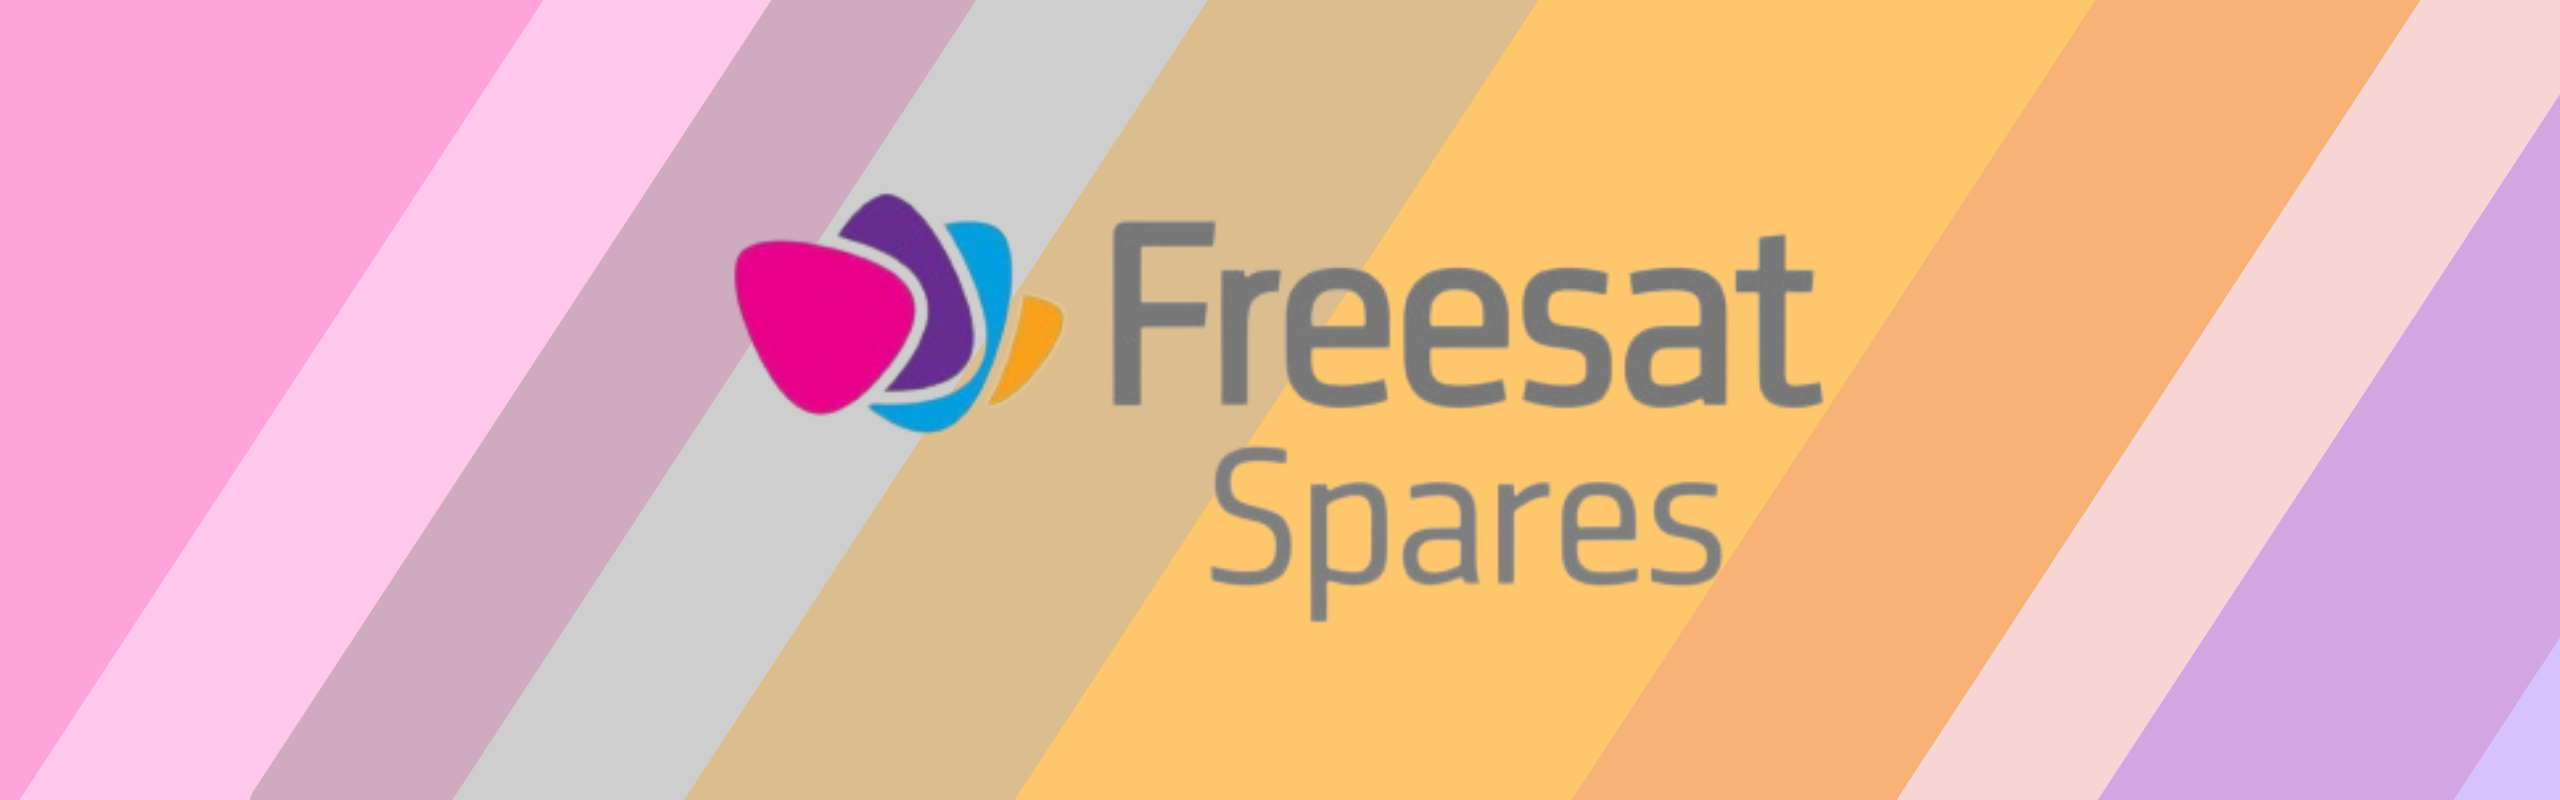 FreesatSpares-Banner-Large